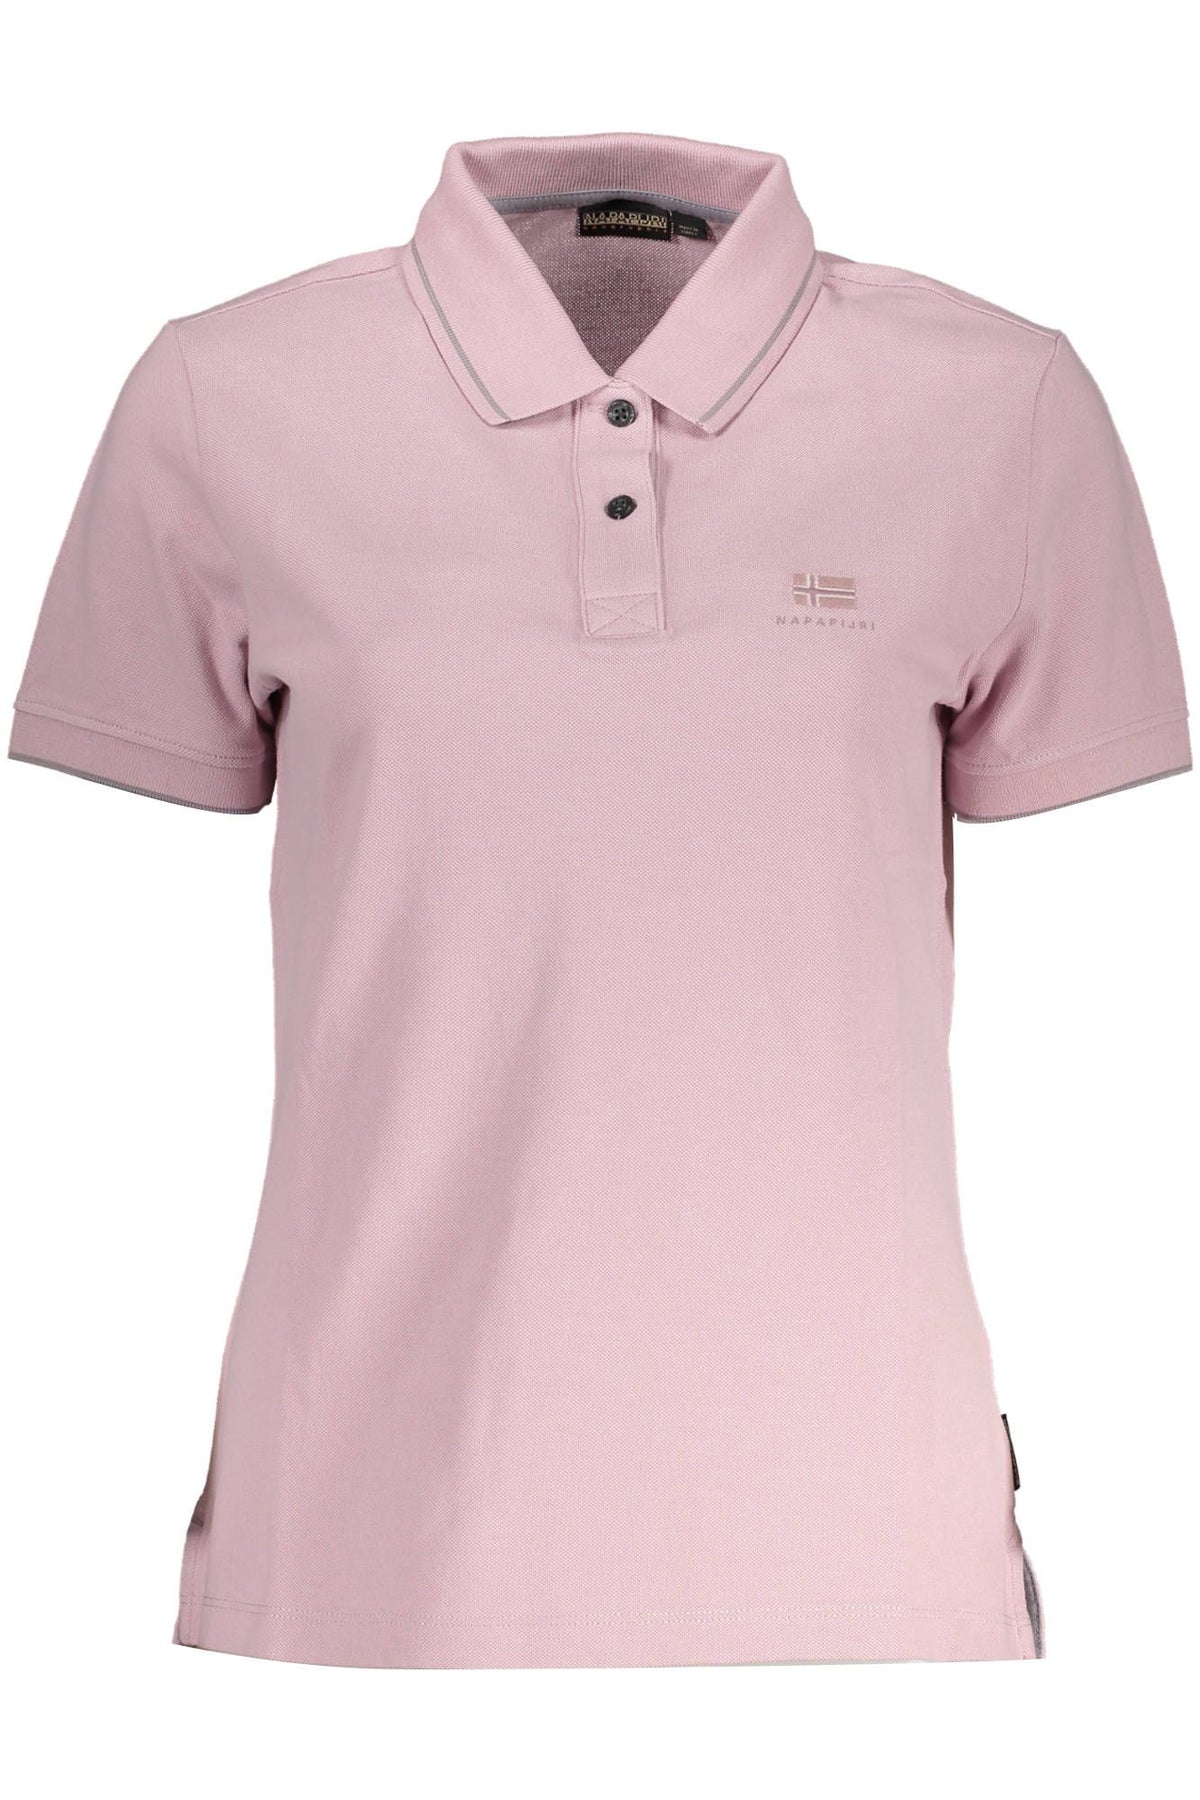 Napapijri – Schickes rosa Poloshirt mit kontrastierenden Details